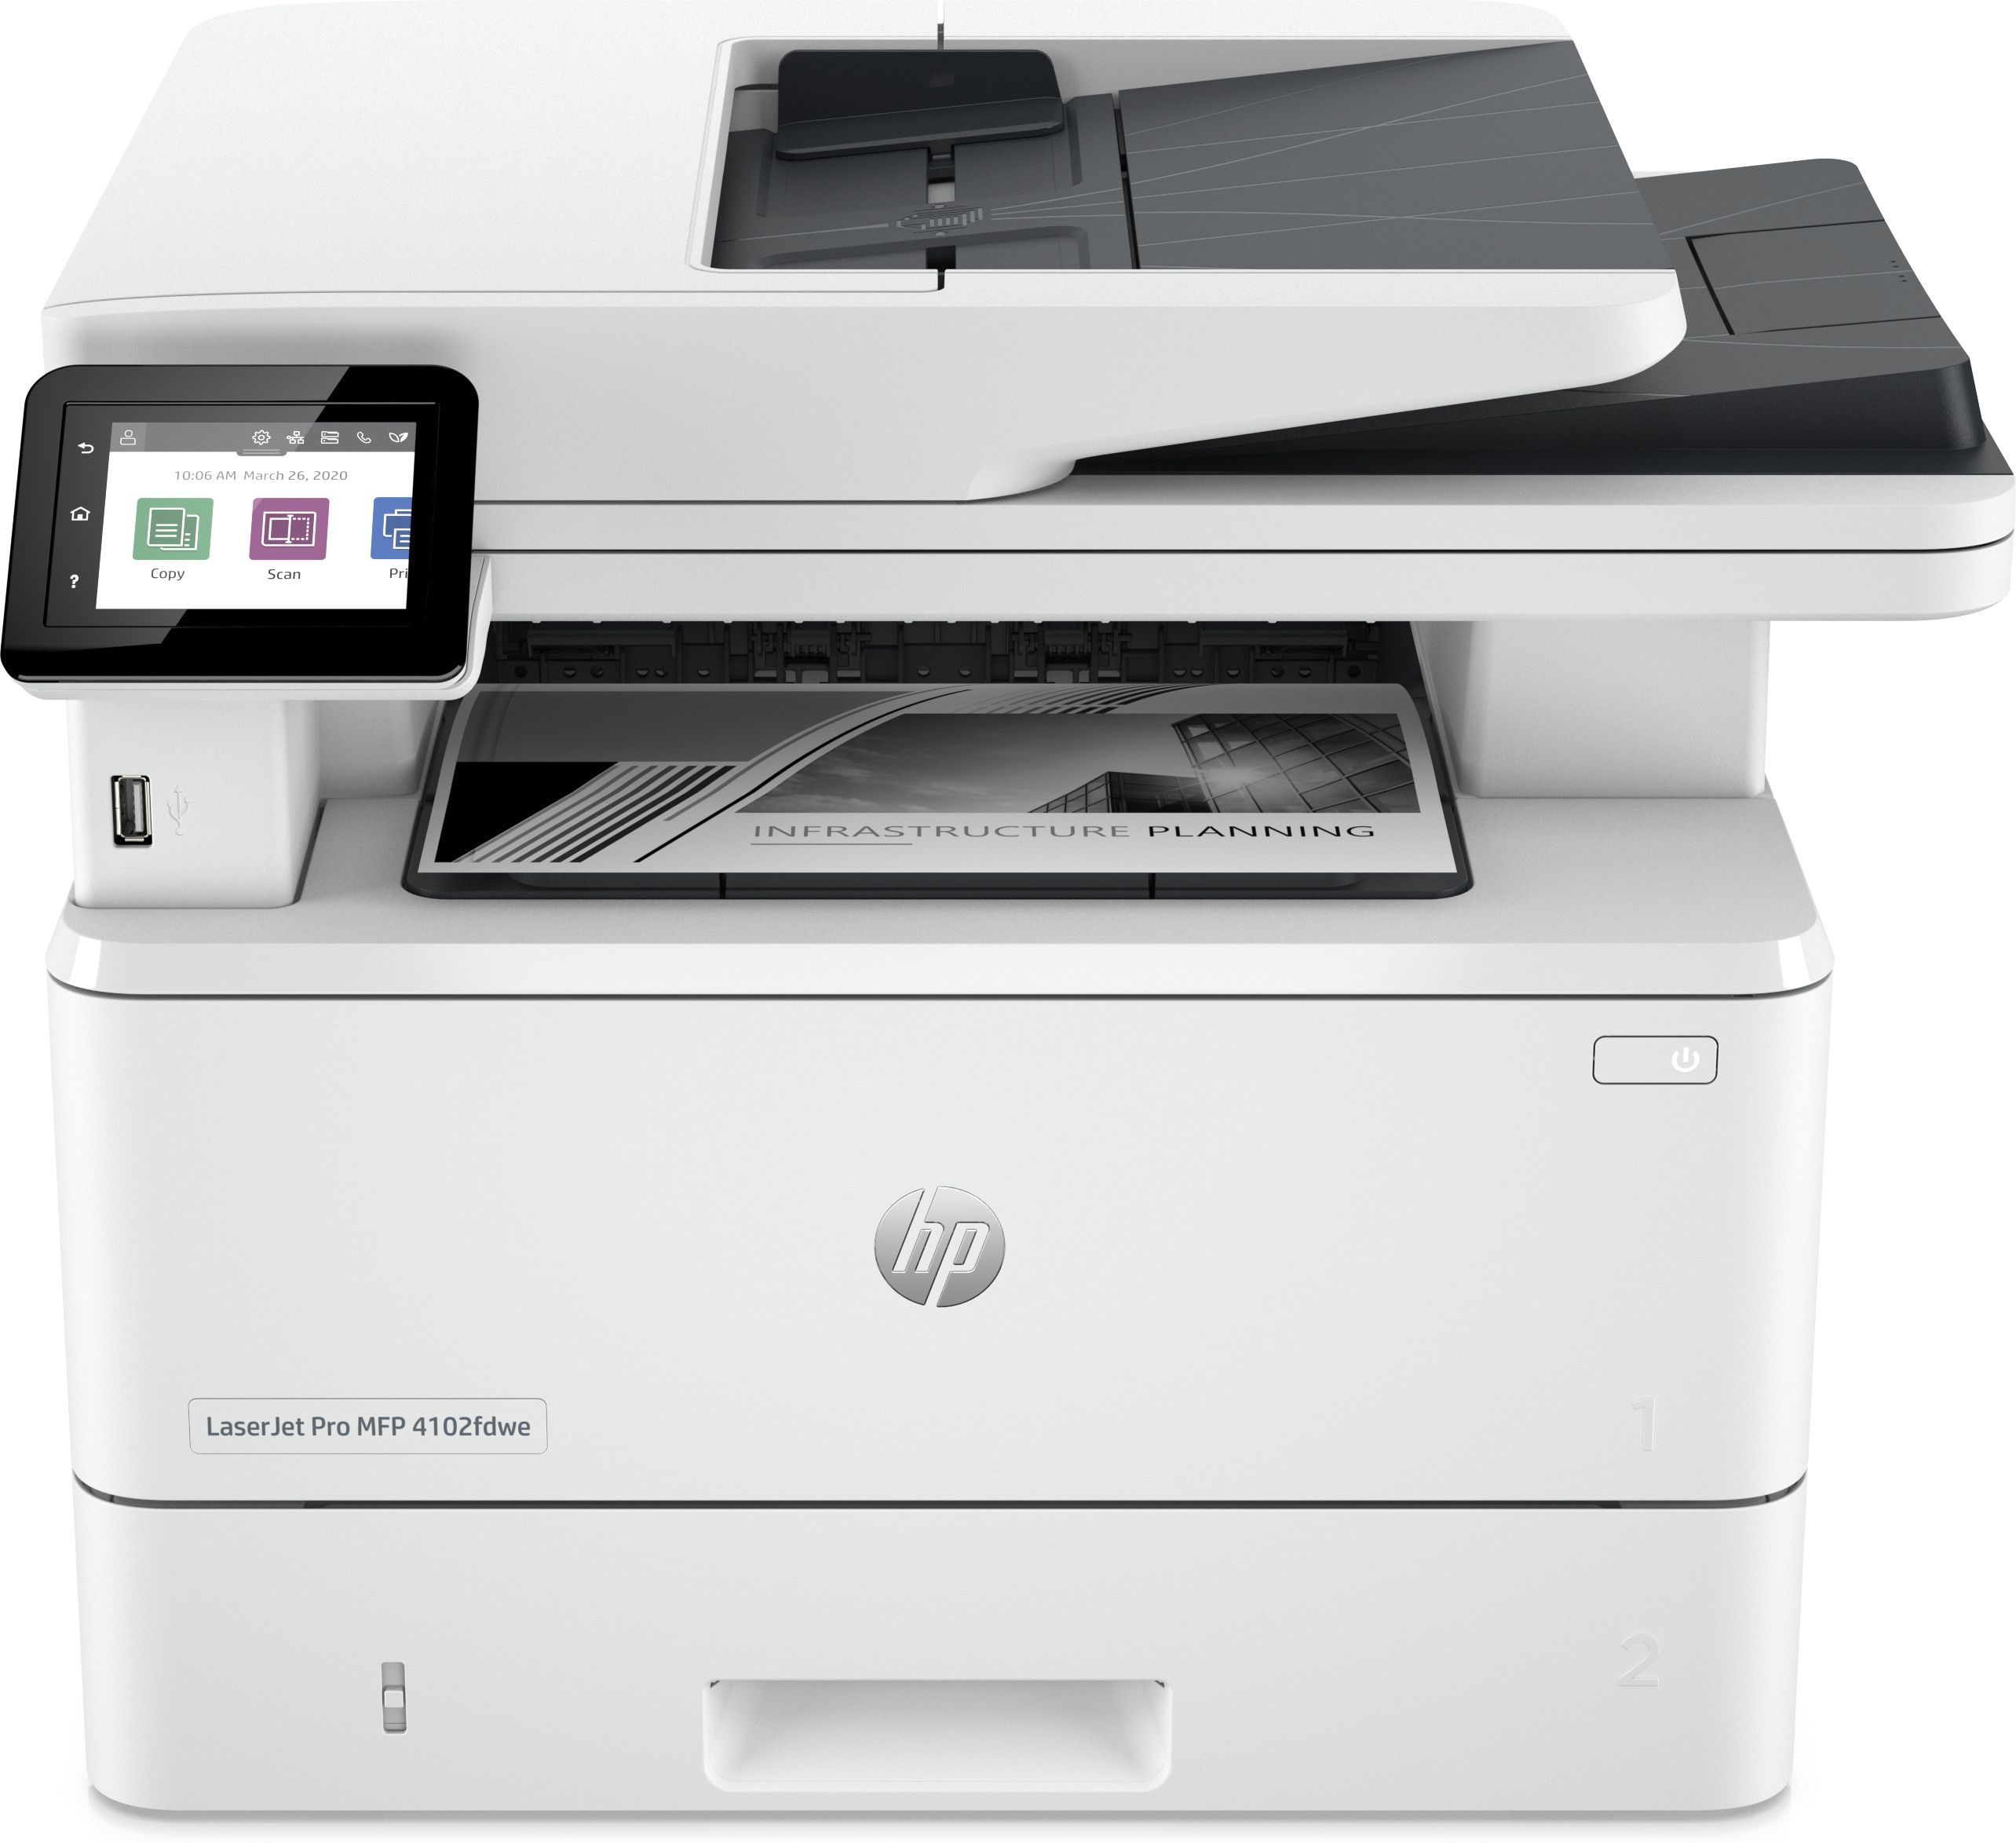 HP LaserJet Pro MFP 4102fdwe - multifunction printer - B/W - with HP+